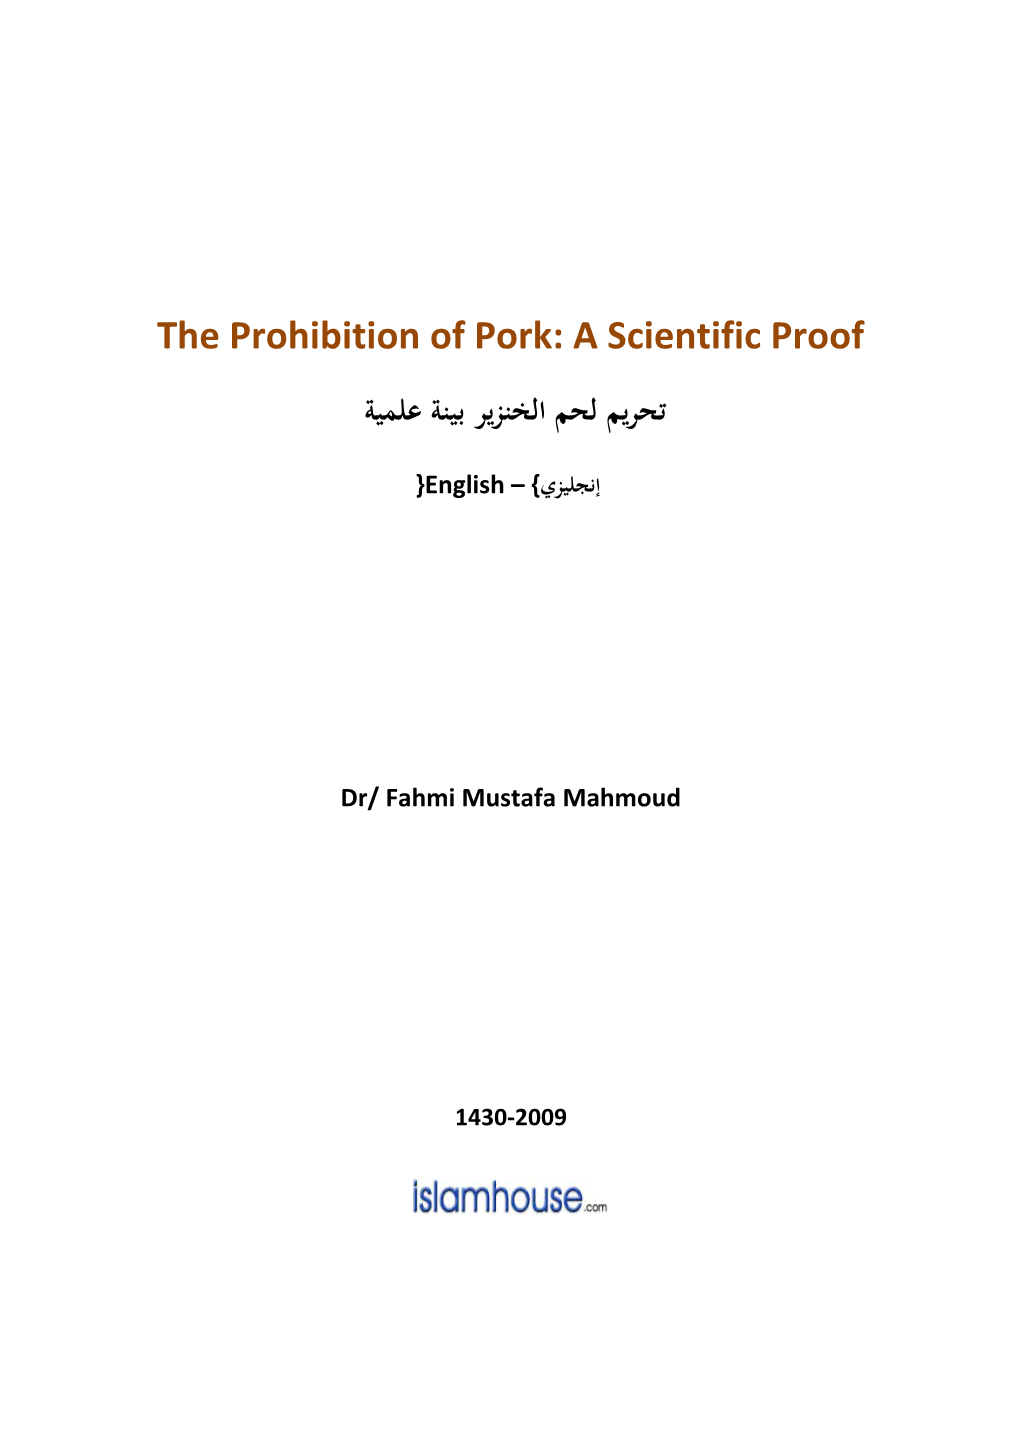 The Prohibition of Pork: a Scientific Proof